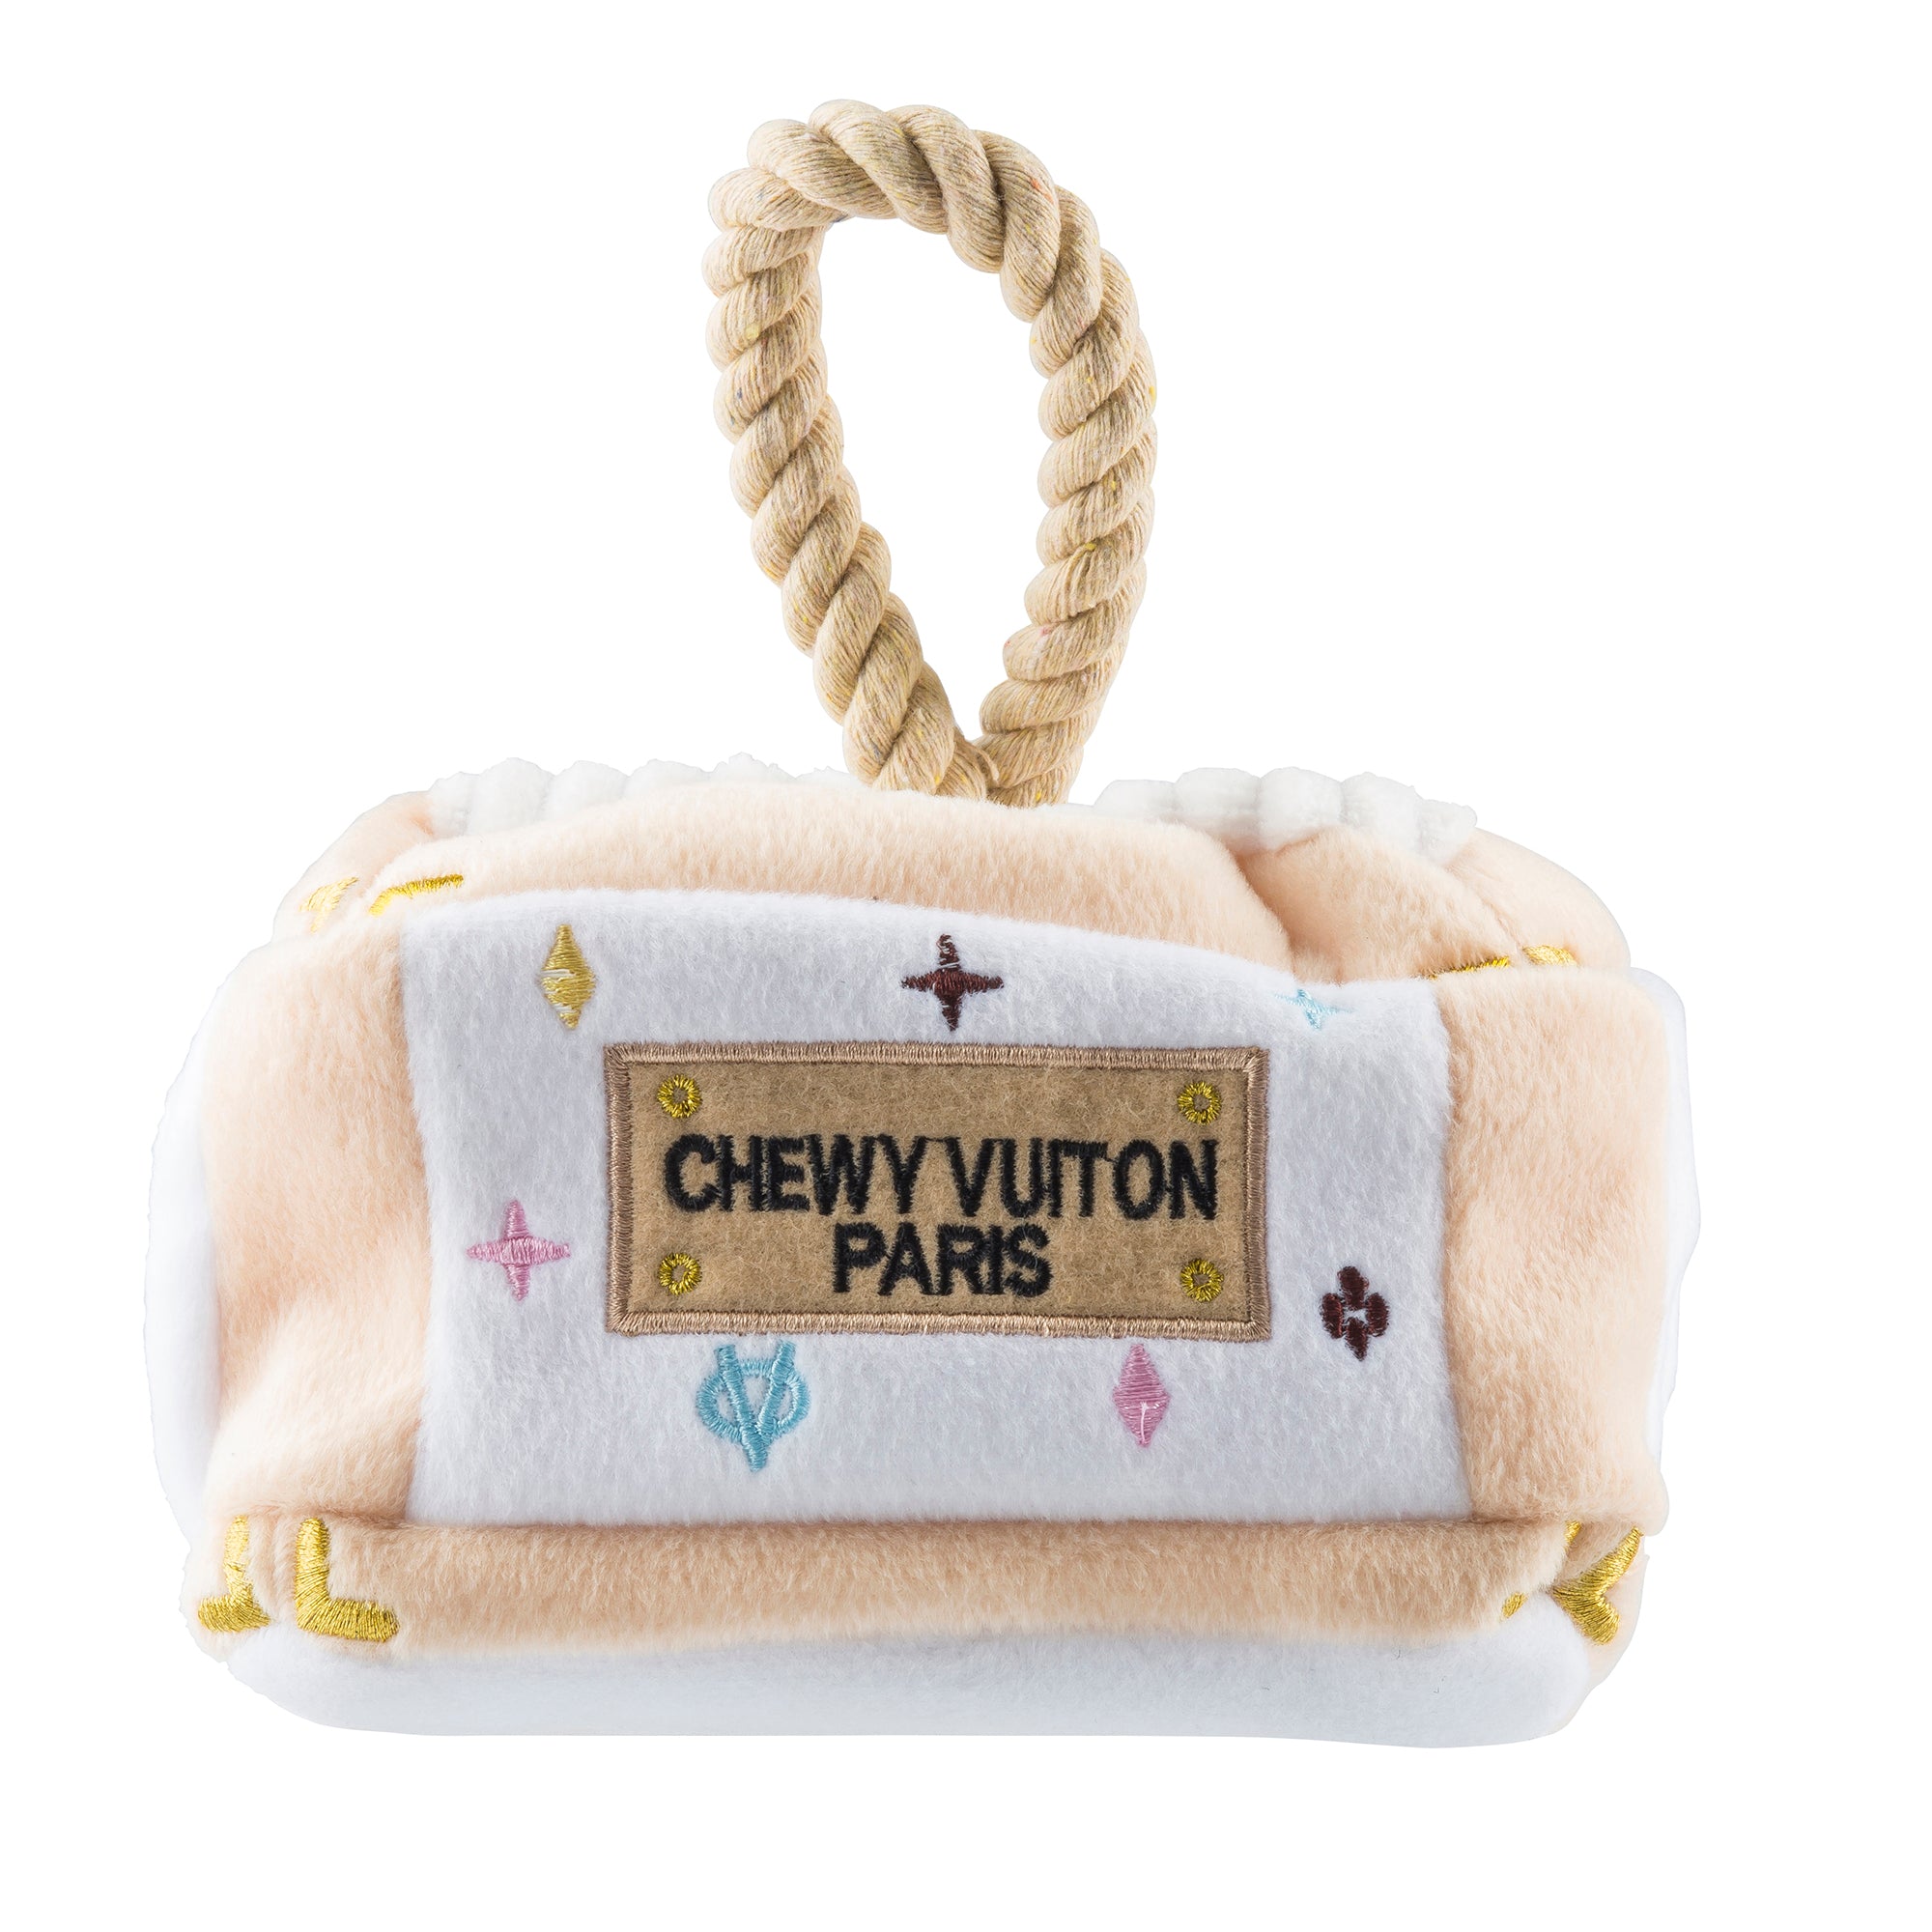 Chewy Vuitton Red Trim Designer Purse Dog Toy